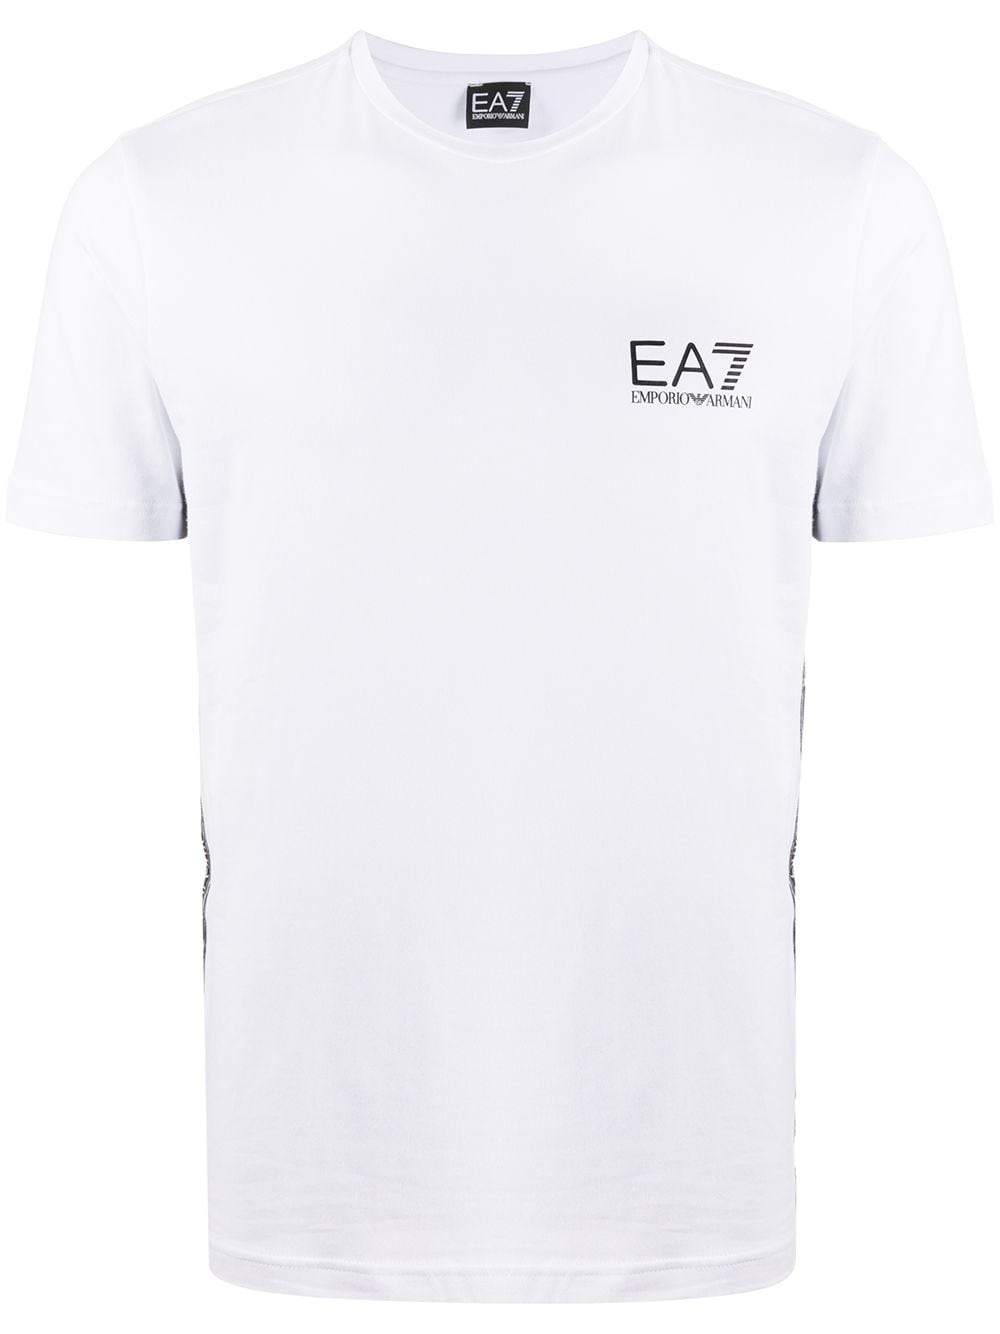 фото Ea7 emporio armani футболка с круглым вырезом и логотипом